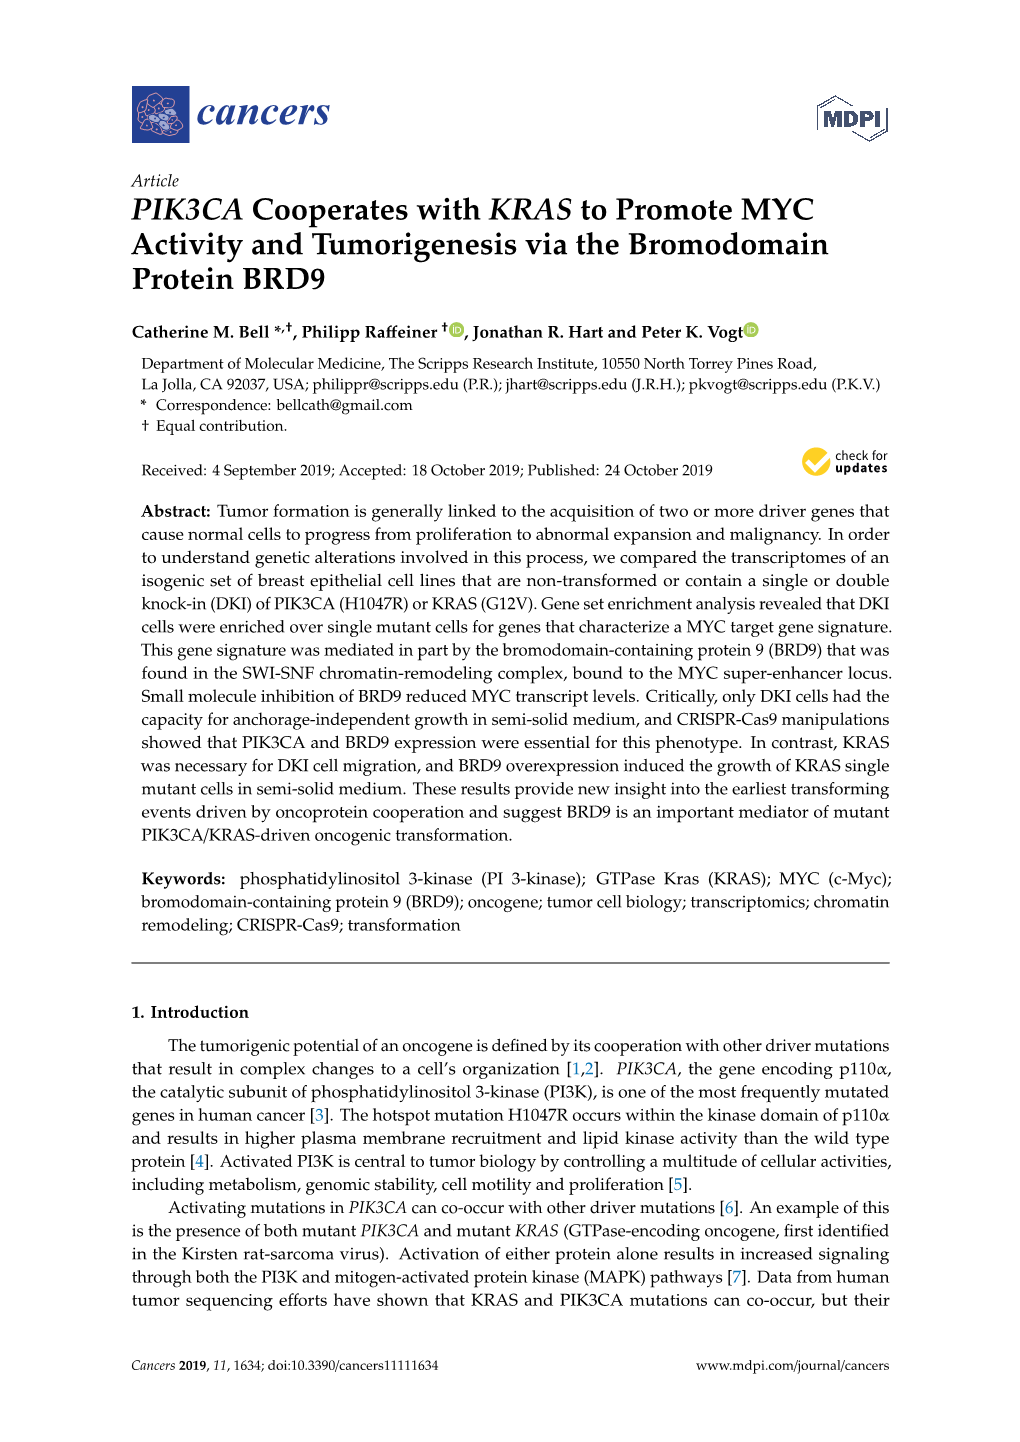 PIK3CA Cooperates with KRAS to Promote MYC Activity and Tumorigenesis Via the Bromodomain Protein BRD9